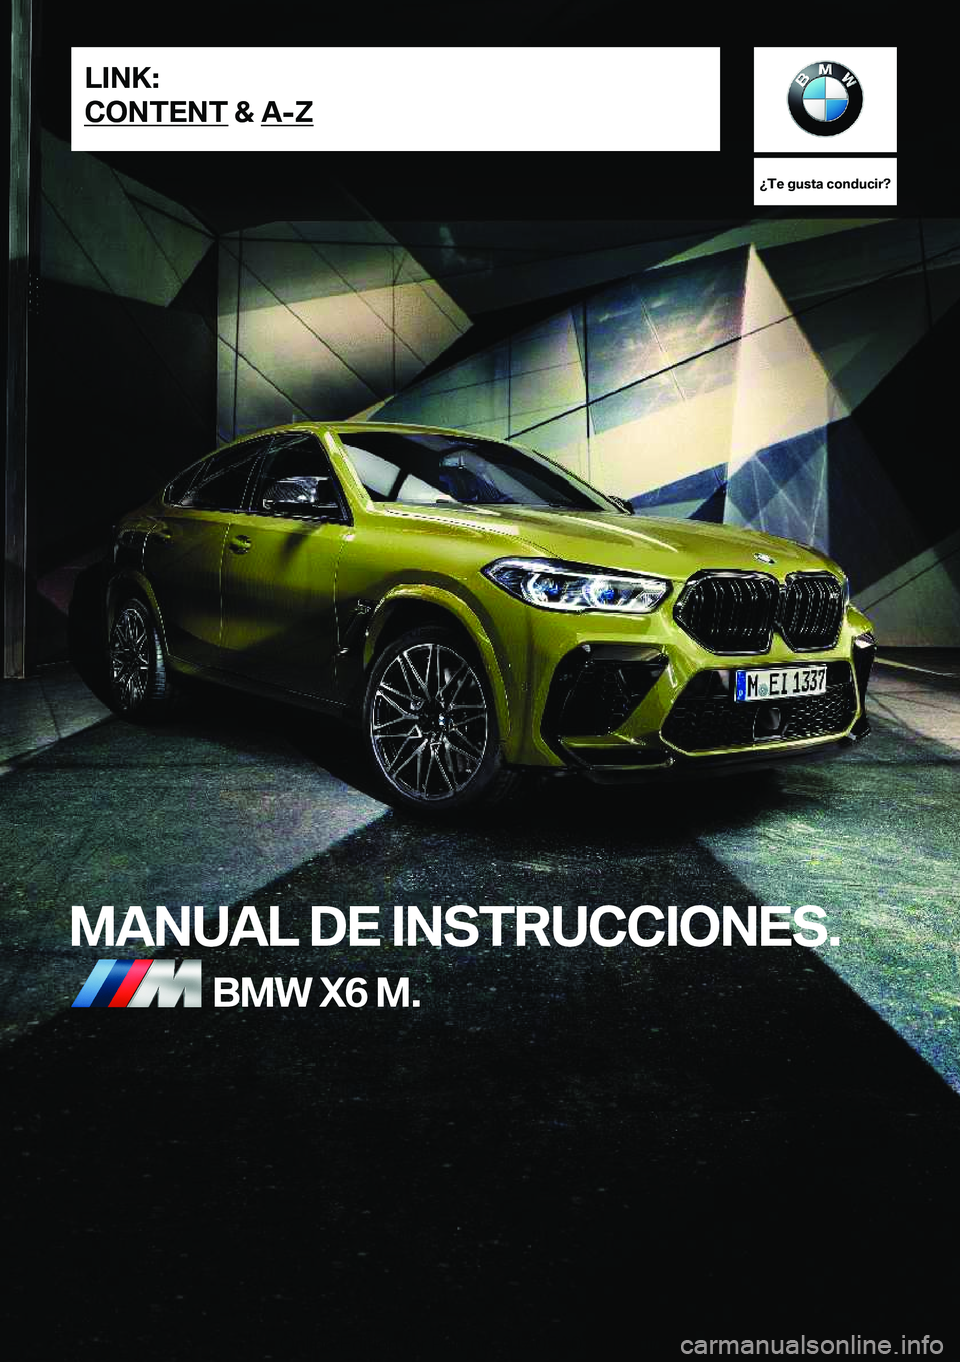 BMW X6 M 2020  Manuales de Empleo (in Spanish) ��T�e��g�u�s�t�a��c�o�n�d�u�c�i�r� 
�M�A�N�U�A�L��D�E��I�N�S�T�R�U�C�C�I�O�N�E�S�.�B�M�W��X�6��M�.�L�I�N�K�:
�C�O�N�T�E�N�T��&��A�-�Z�O�n�l�i�n�e��E�d�i�t�i�o�n��f�o�r��P�a�r�t��n�o�.��0